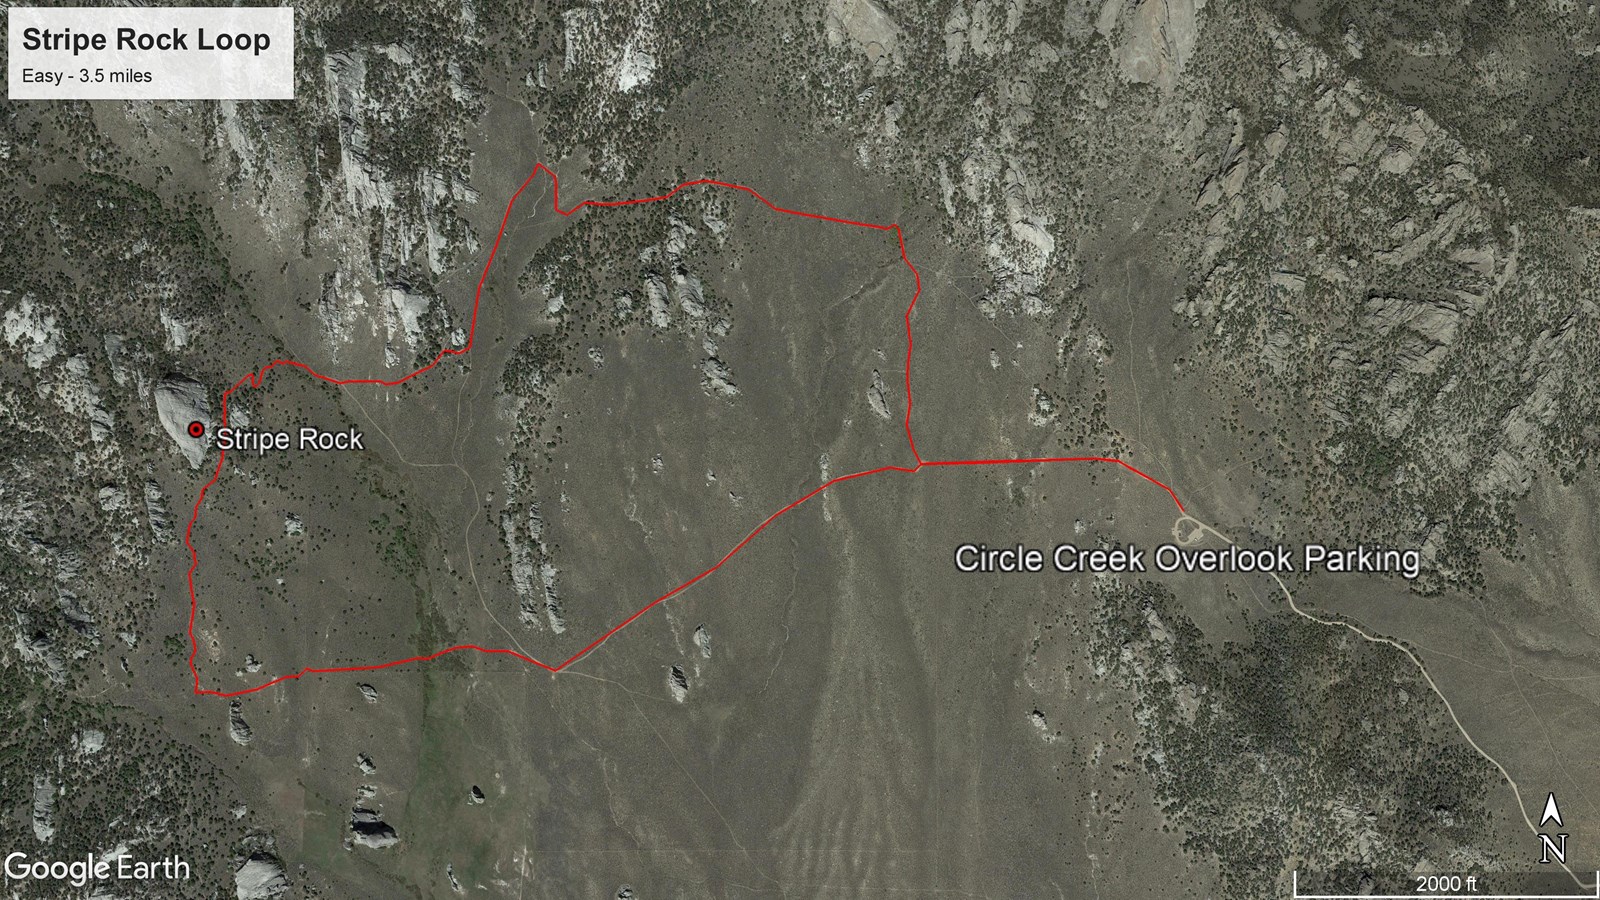 Satellite map highlighting the Stripe Rock Loop hike, starting from Circle Creek Overlook Parking.